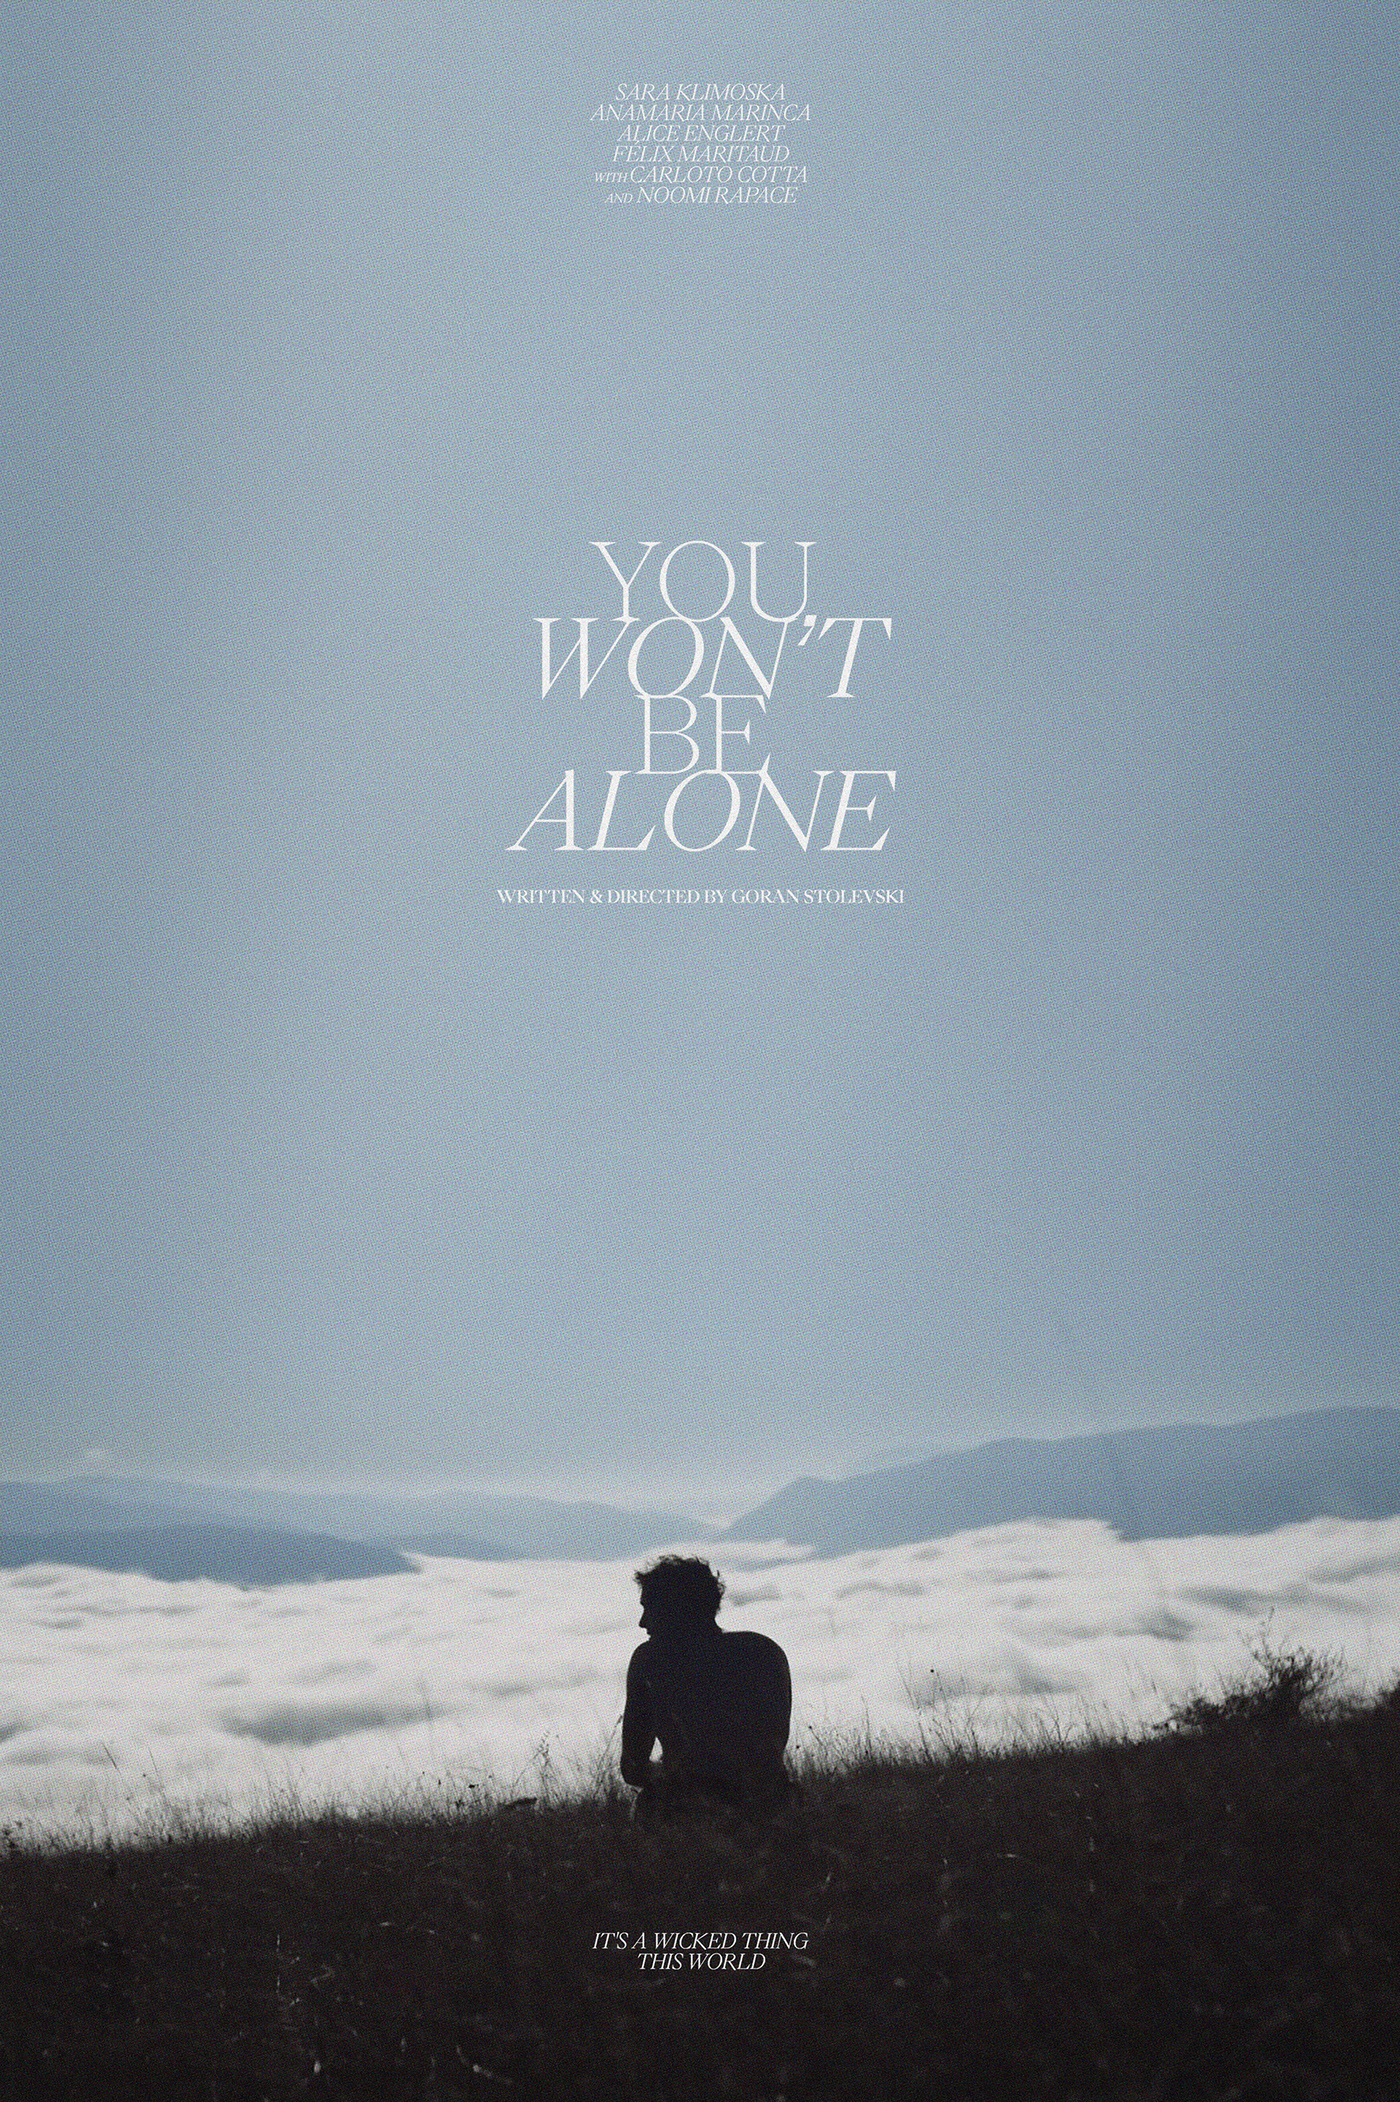 Goran Stolevski's 'You Won't Be Alone'